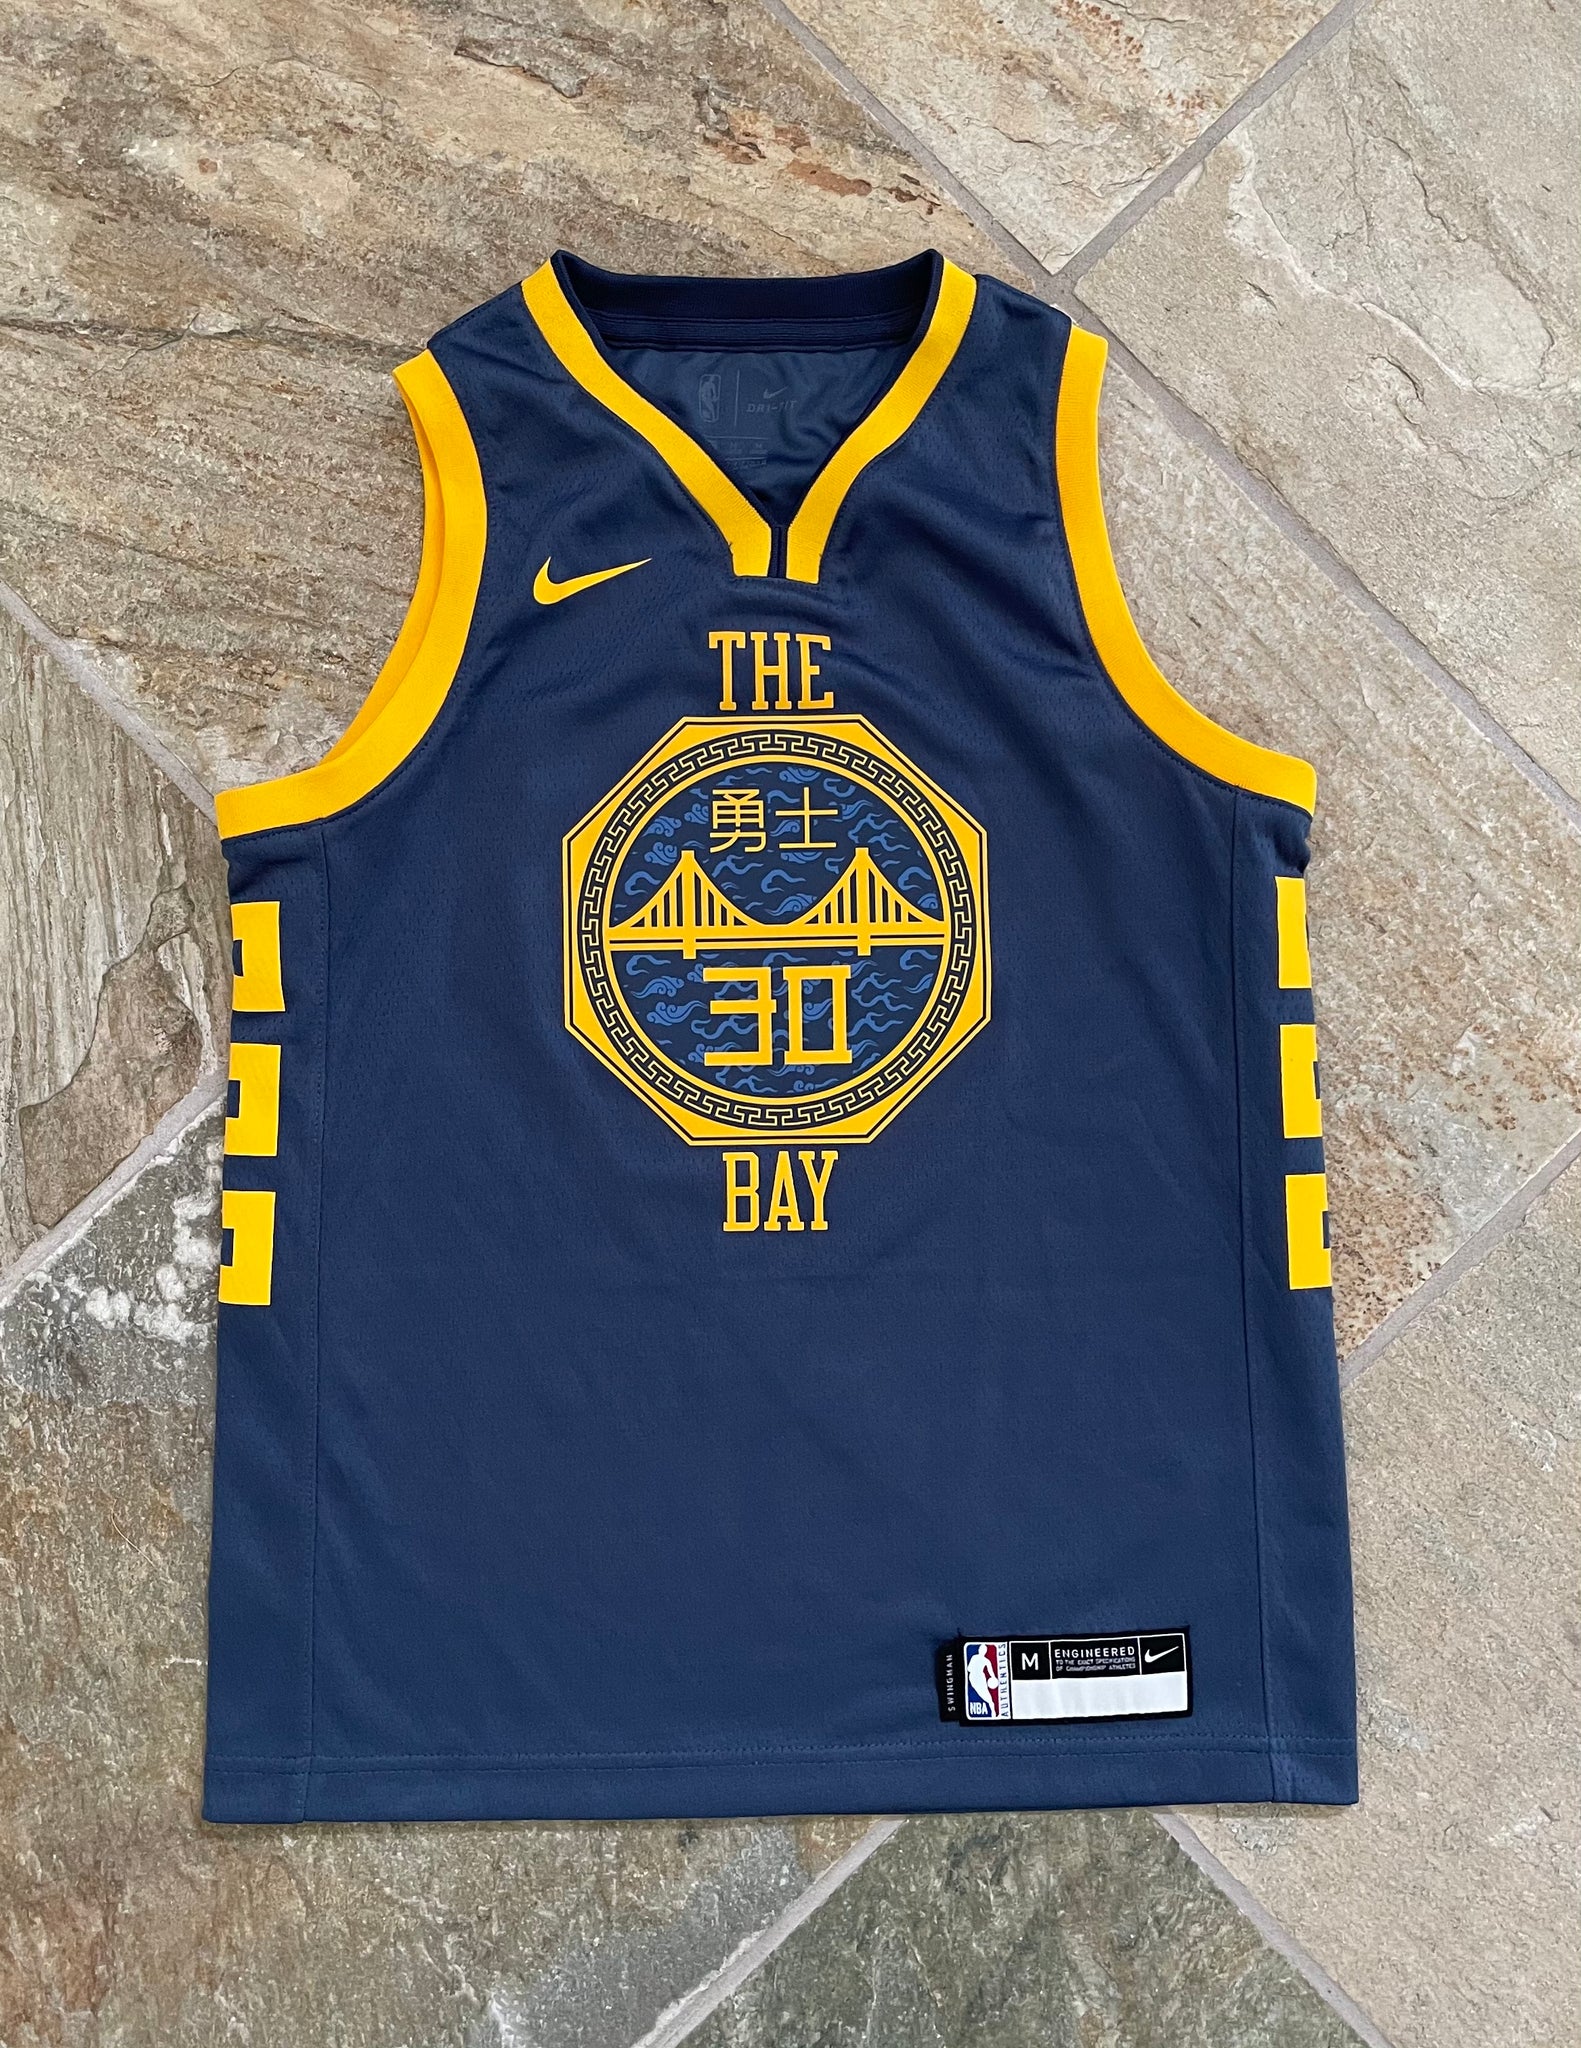 Nike NBA Curry Golden State Warriors Jersey Junior - Blue - Kids, Compare